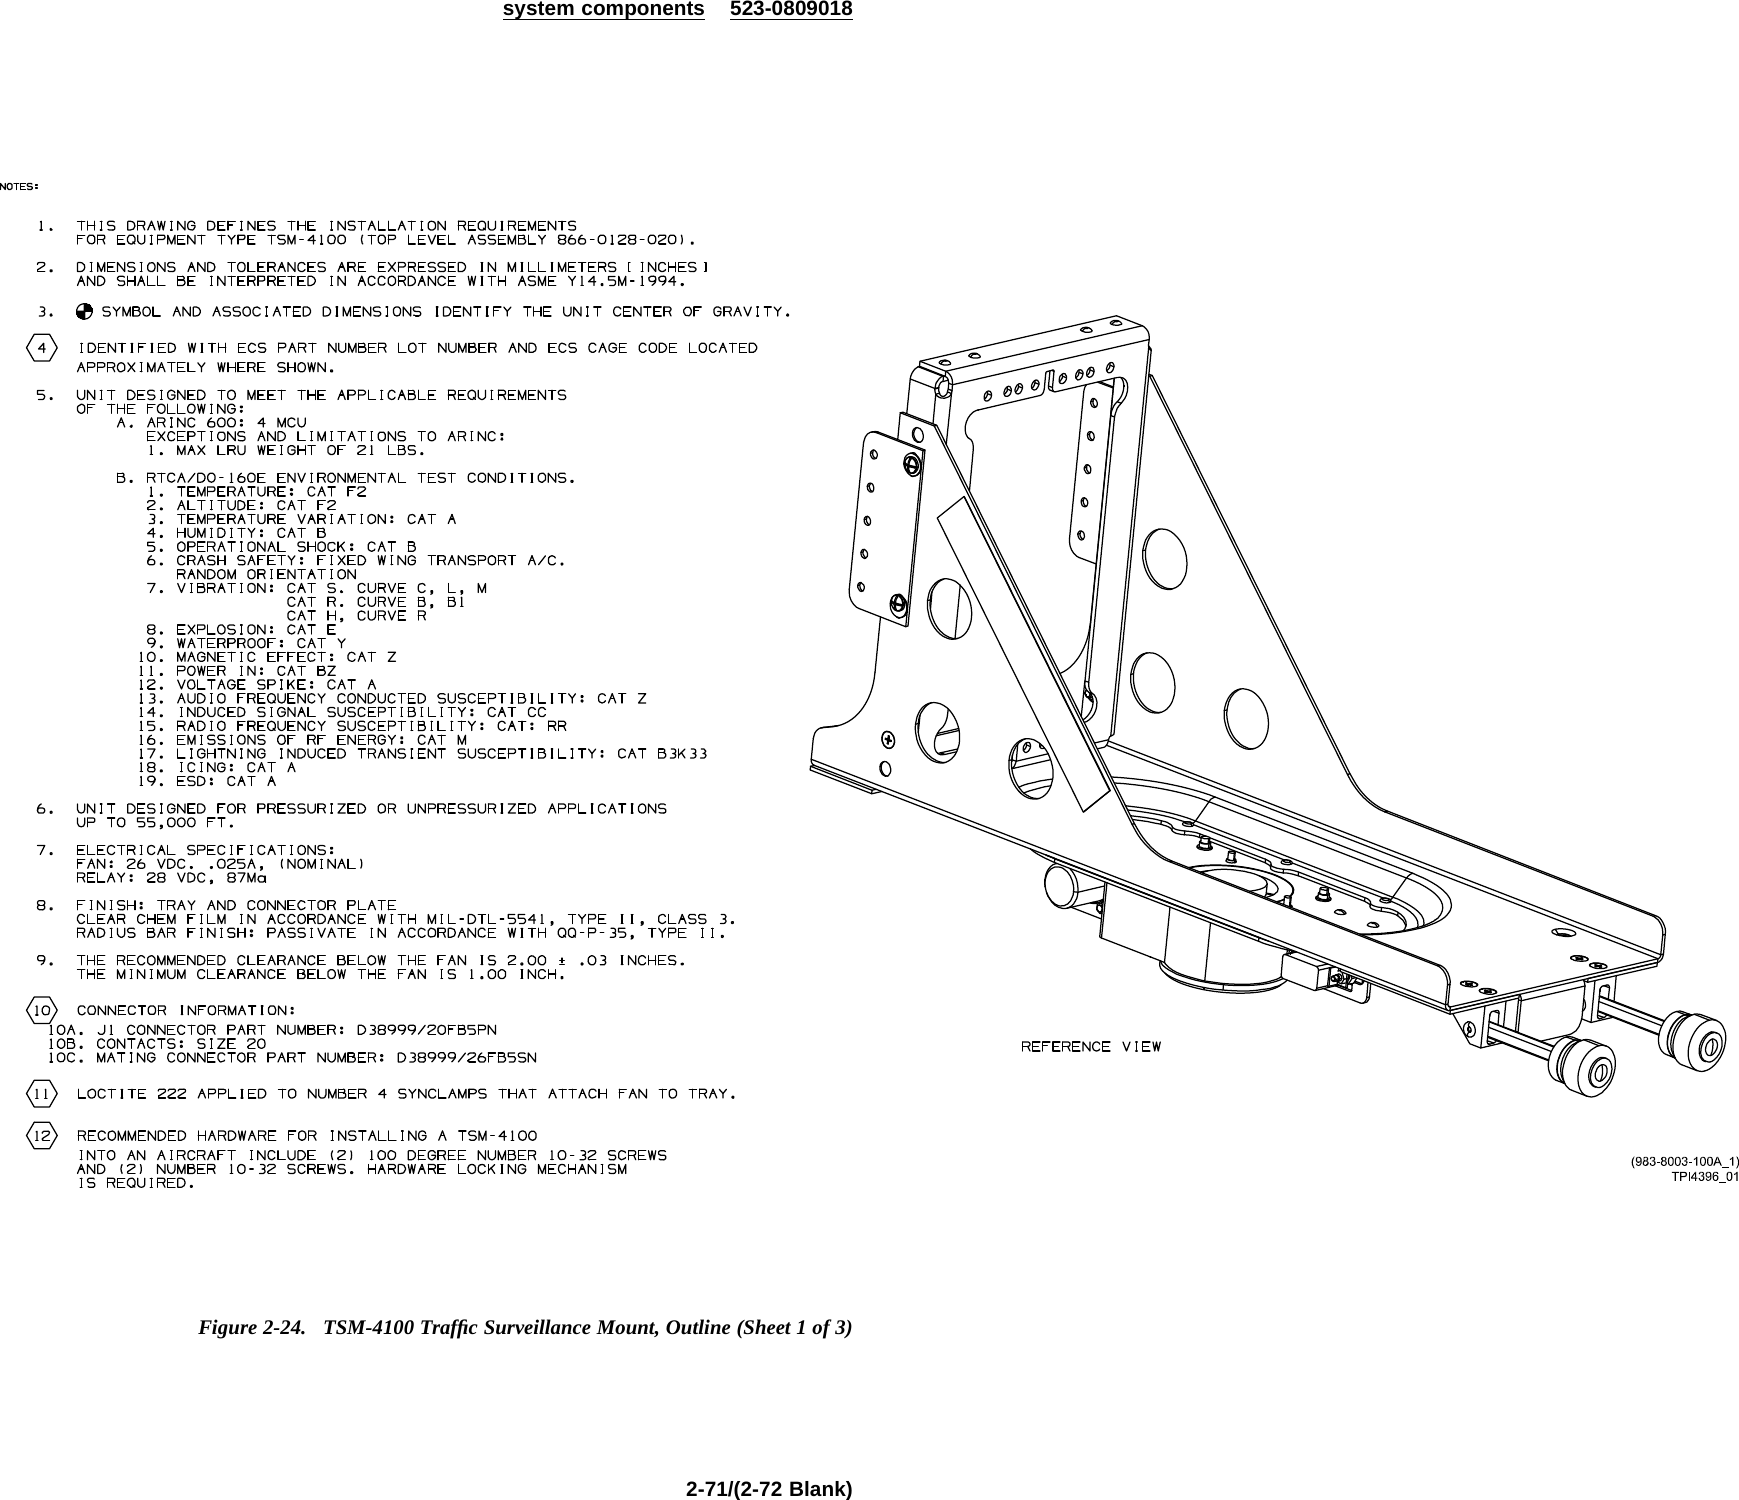 system components 523-0809018Figure 2-24. TSM-4100 Trafﬁc Surveillance Mount, Outline (Sheet 1 of 3)2-71/(2-72 Blank)